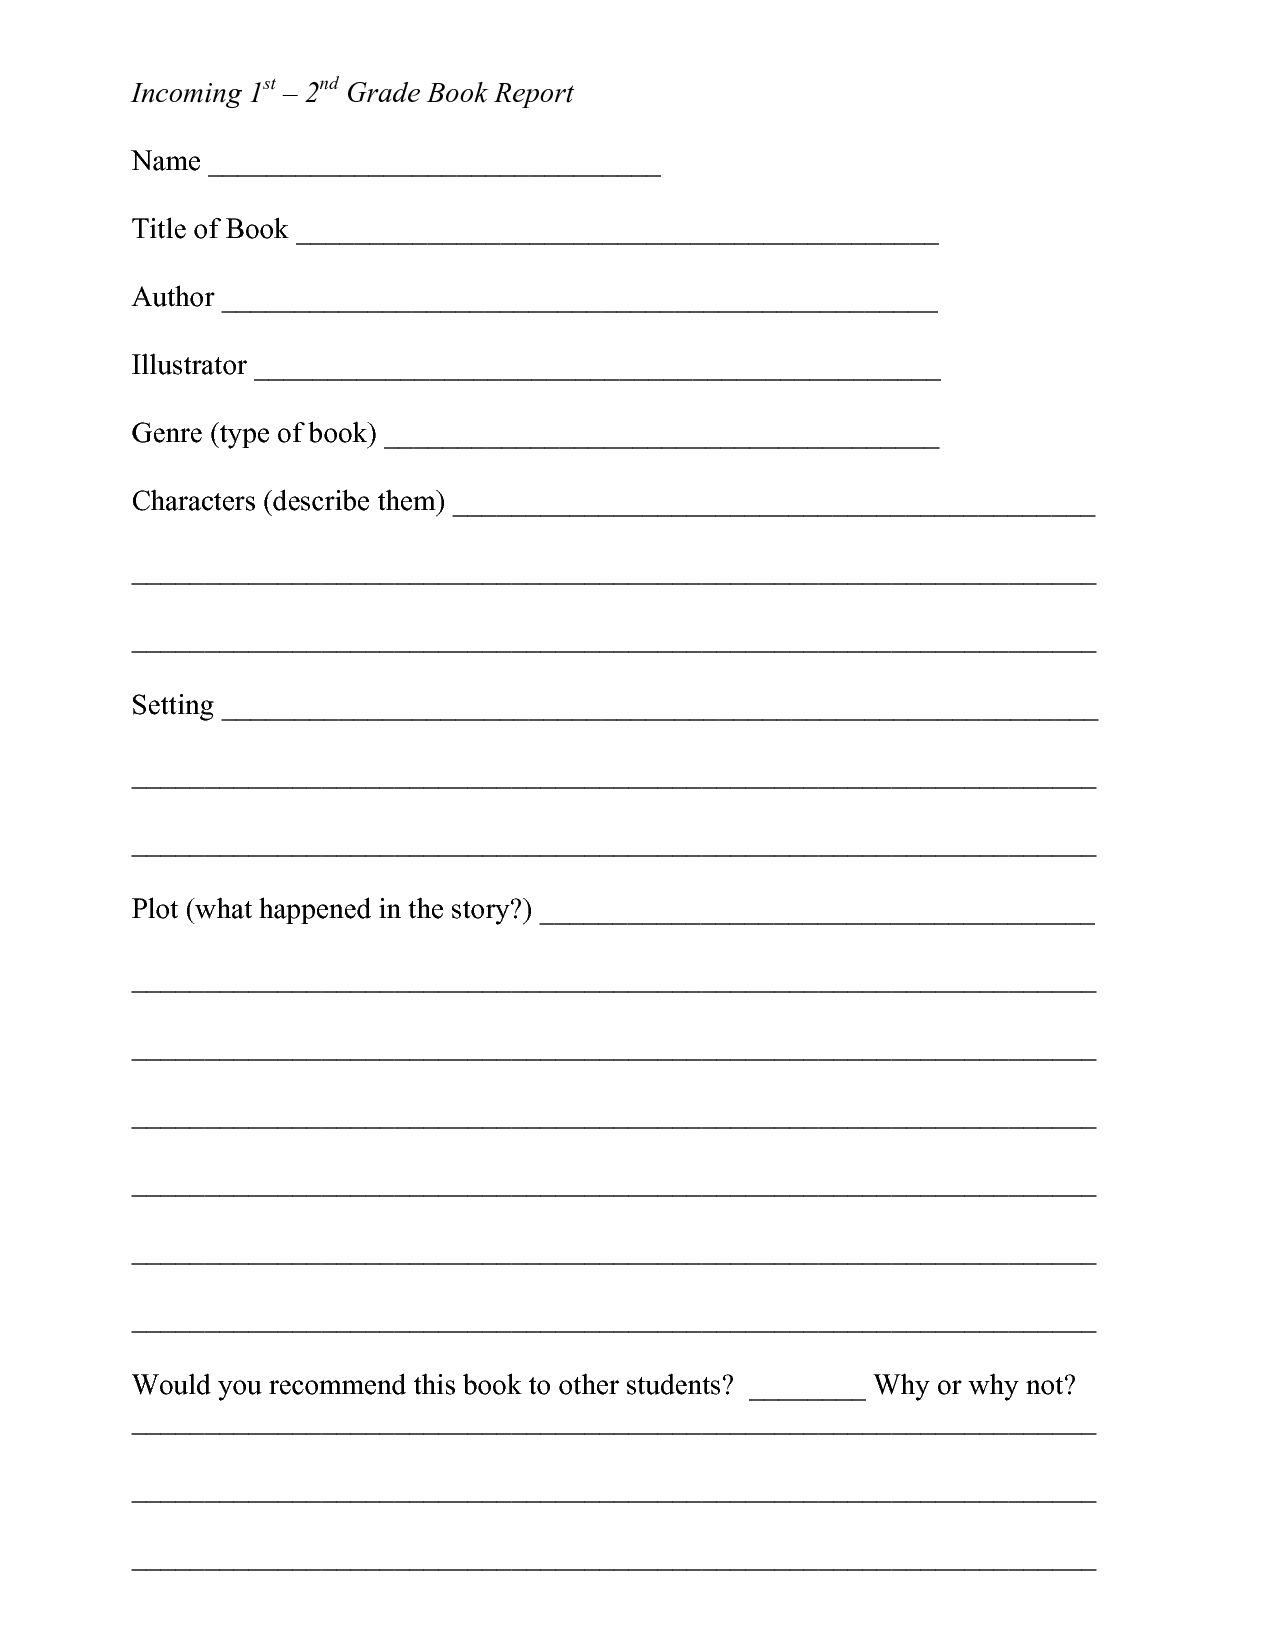 Book Report Template 2Nd Grade Free – Book Report Form With Regard To Book Report Template 2Nd Grade